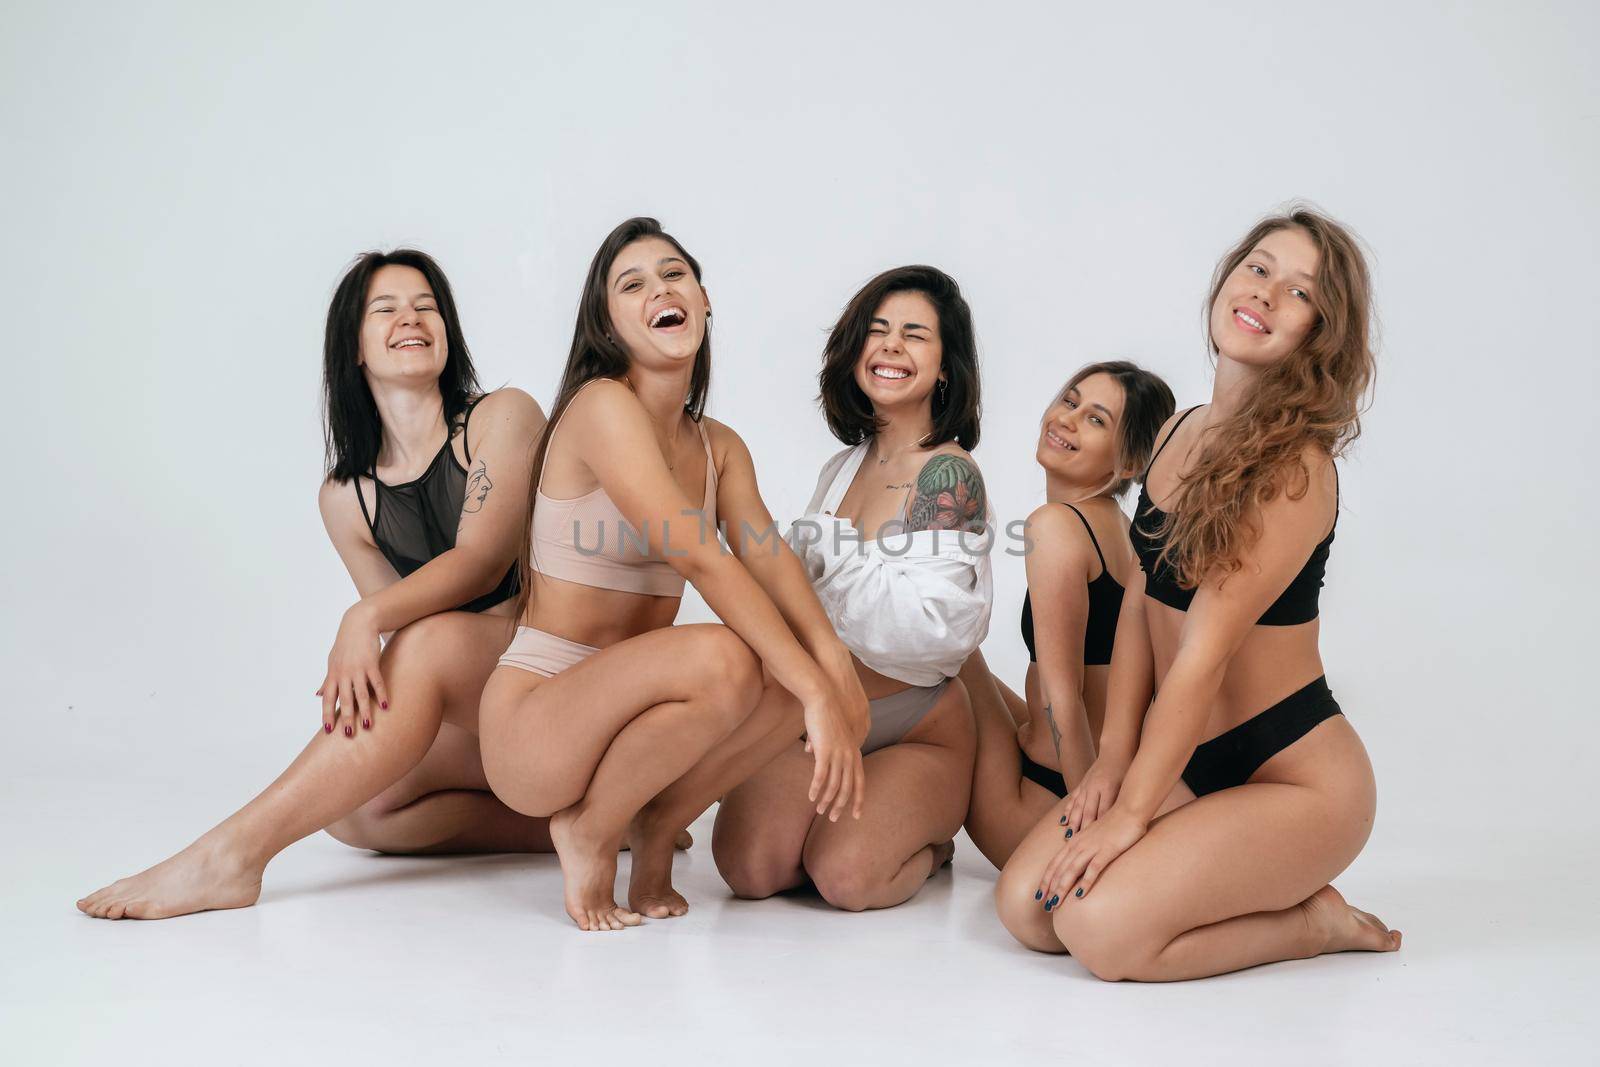 diverse models wearing comfortable underwear, enjoying time together by teksomolika